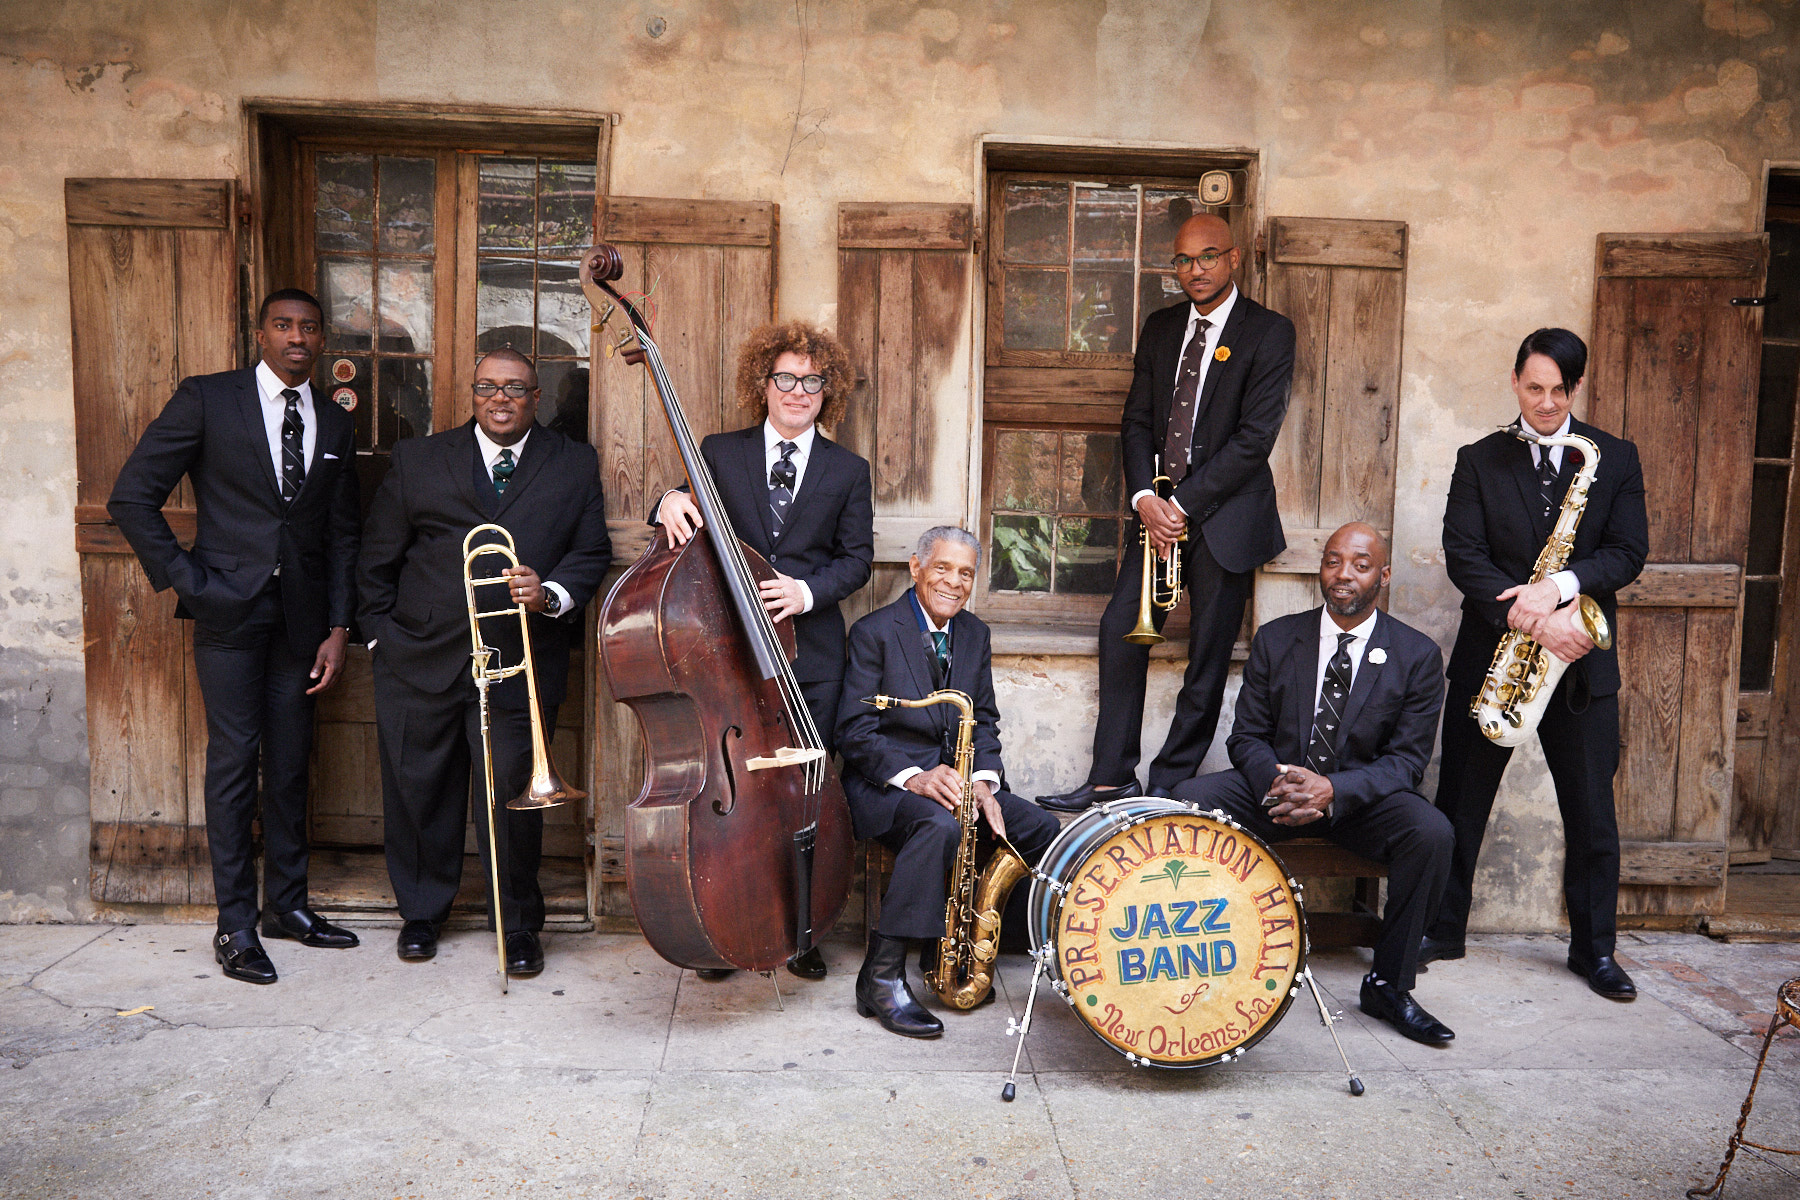 Песни джаз банды. Джаз бэнд. Jazz Band группа. Preservation Hall Jazz Band. Саксофонист джаз бэнд.